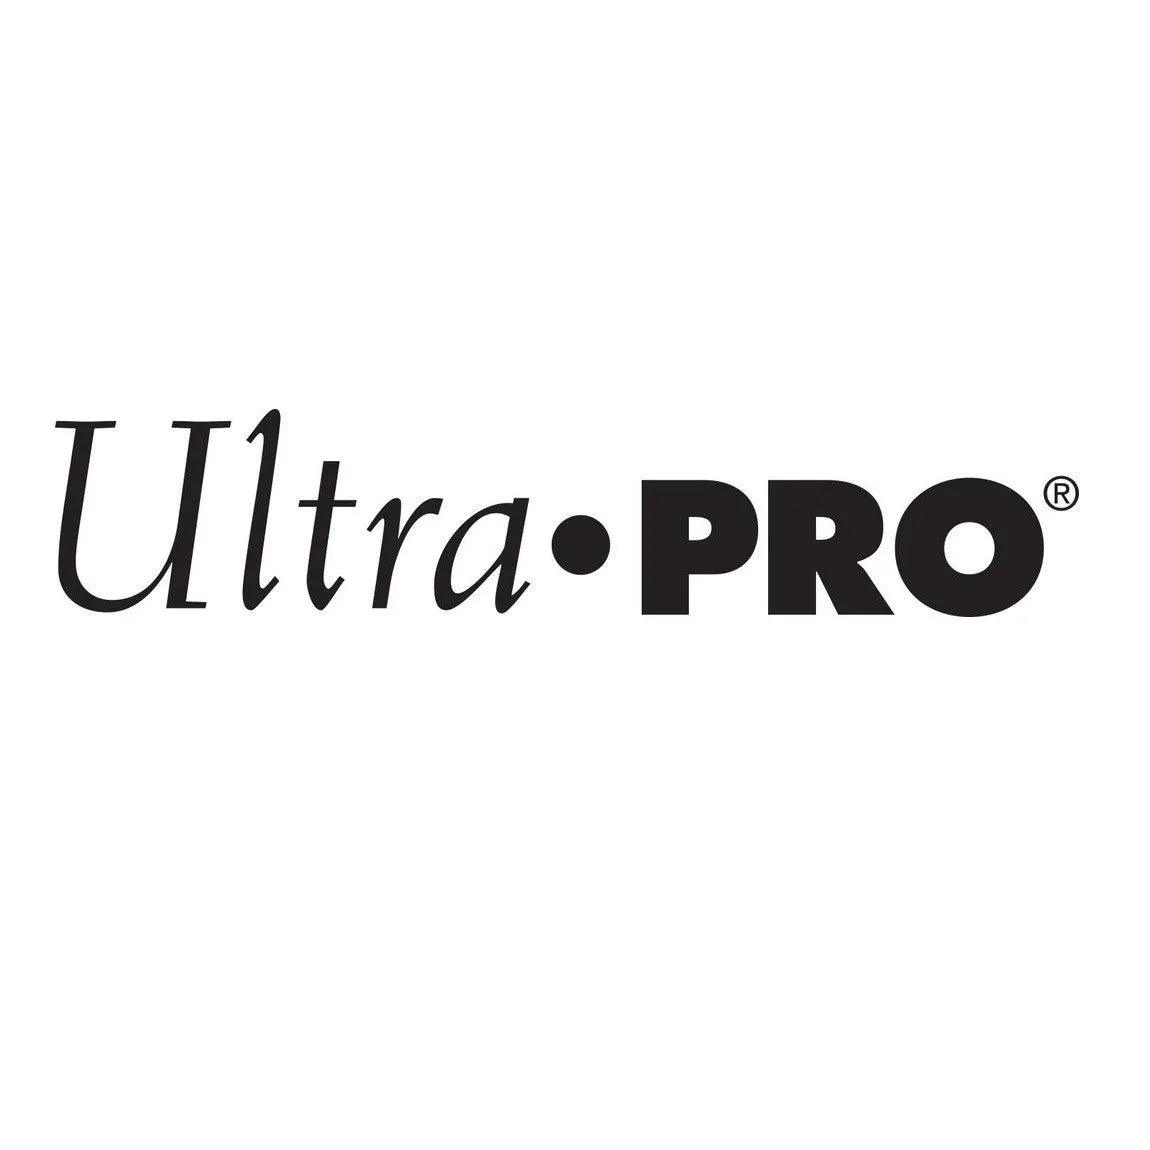 Ultra PRO - Album/Binder/Portfolio 9-Pocket (Holds 180 cards) - Pokemon - Master Ball - Hobby Champion Inc